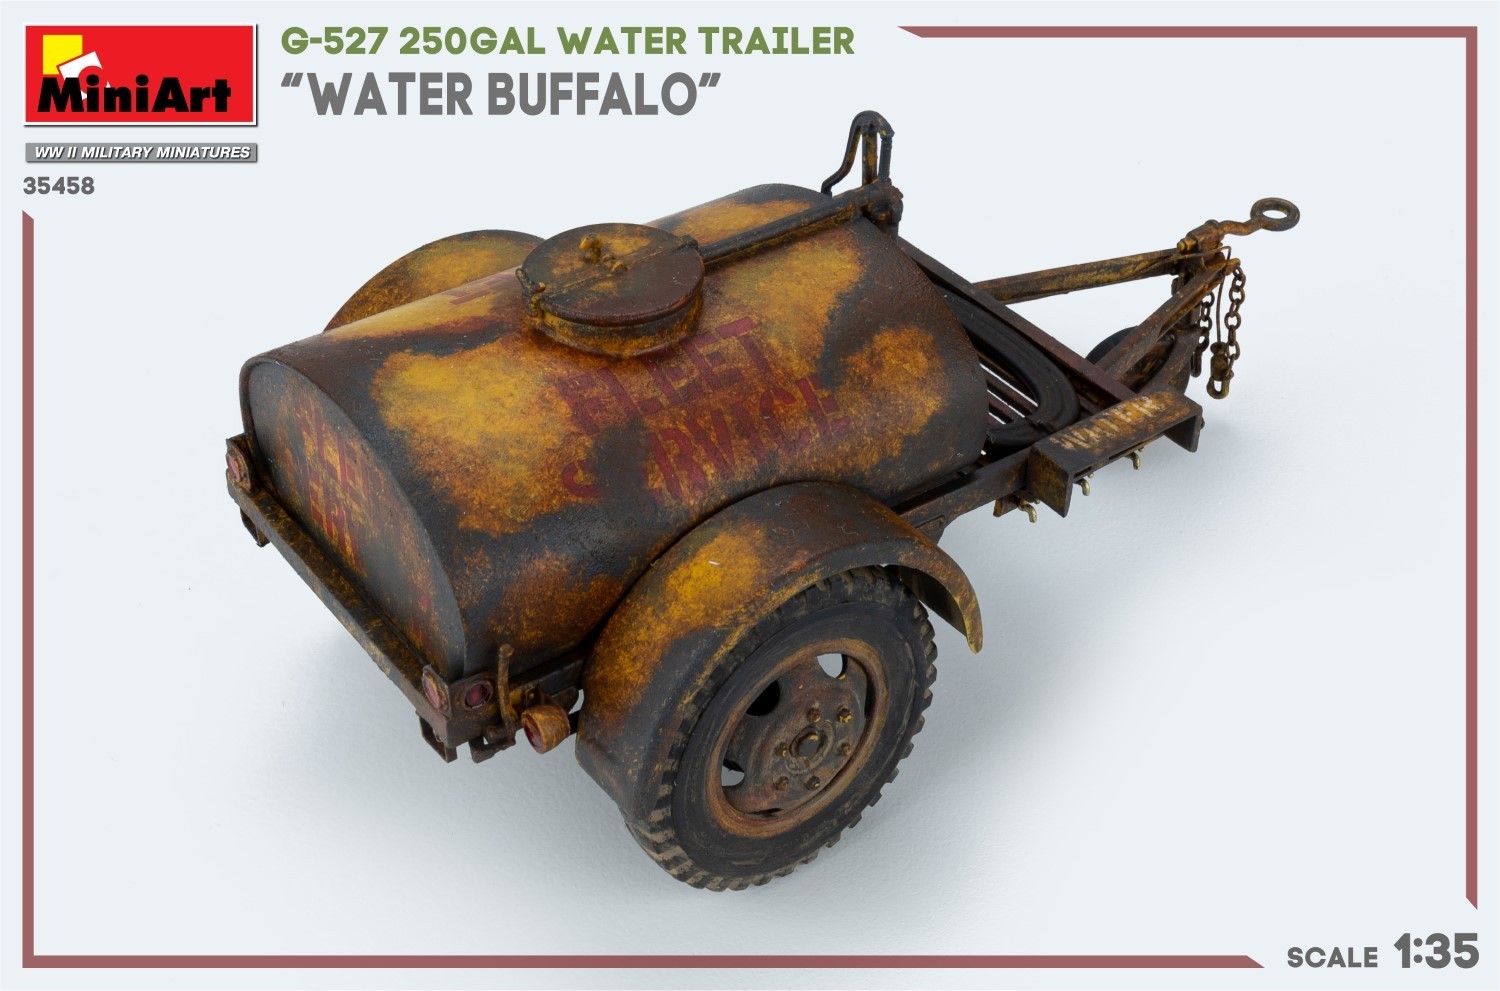 MiniArt G-527 250GAL Water Trailer “Water Buffalo” Rust Paint-7